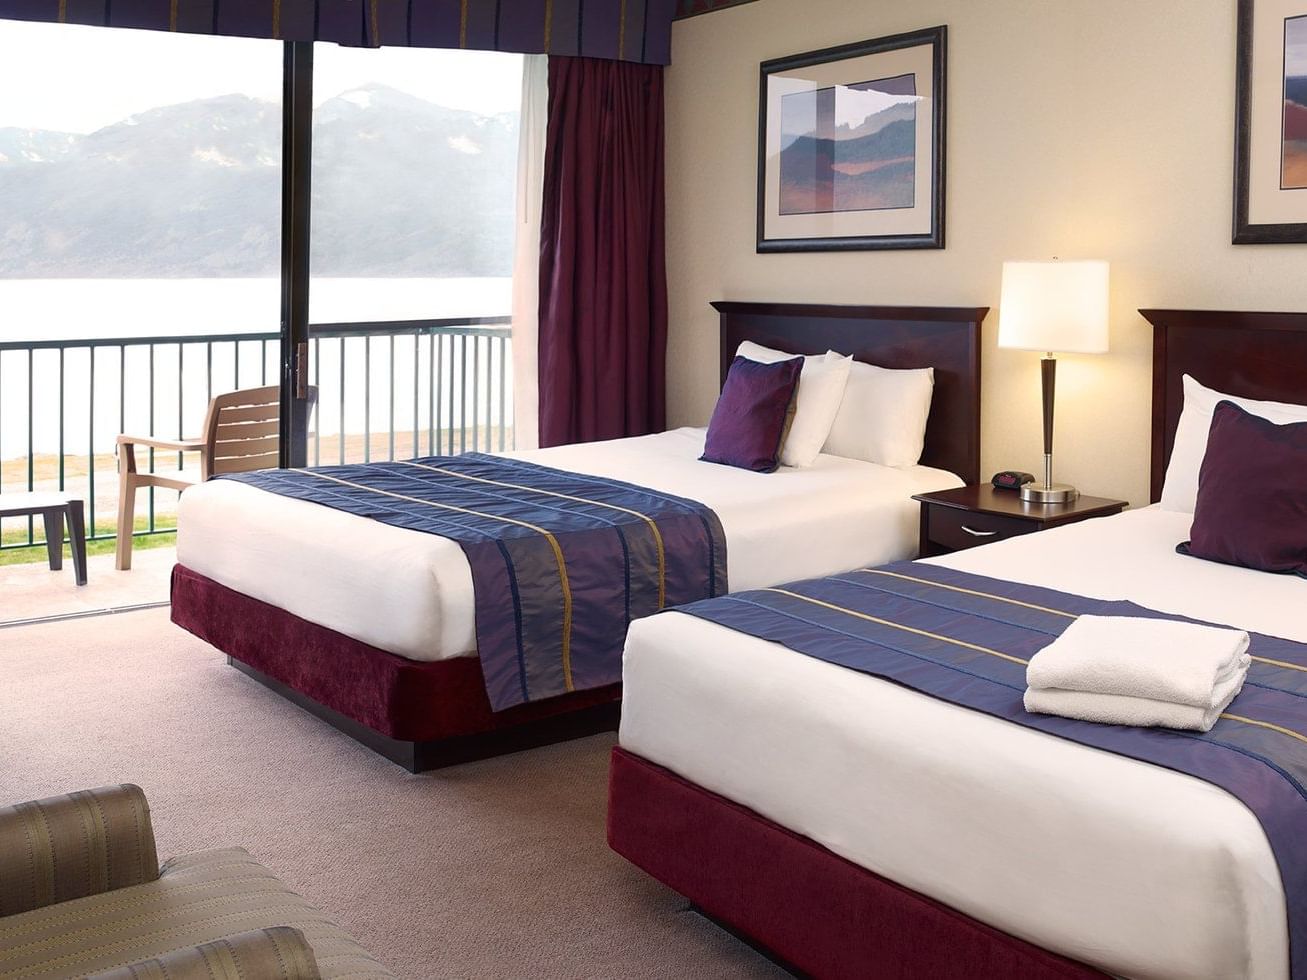 two beds in hotel room with balcony overlooking ocean